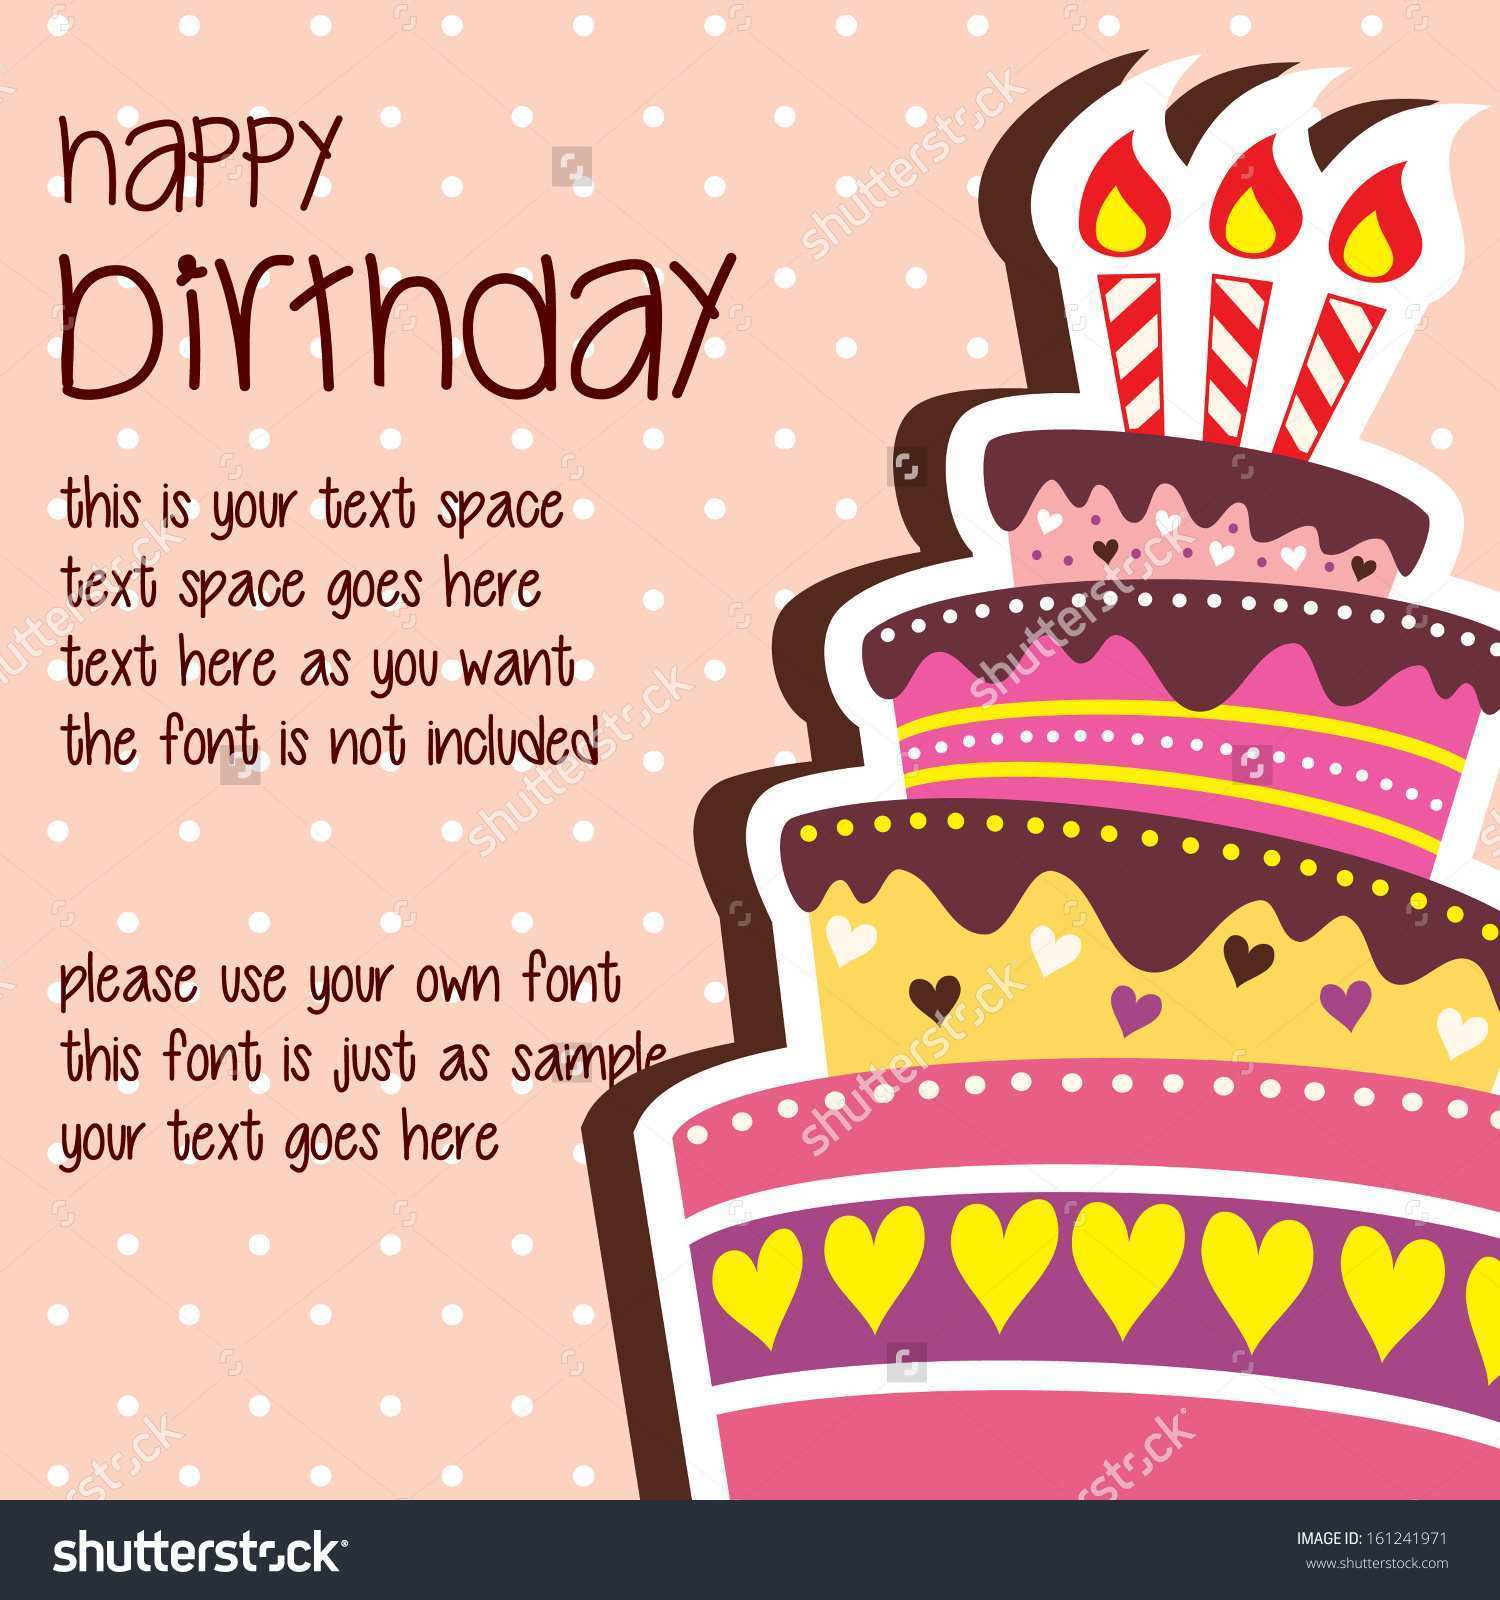 21 Best Happy Birthday Card Template Microsoft Word Now for Happy For Microsoft Word Birthday Card Template